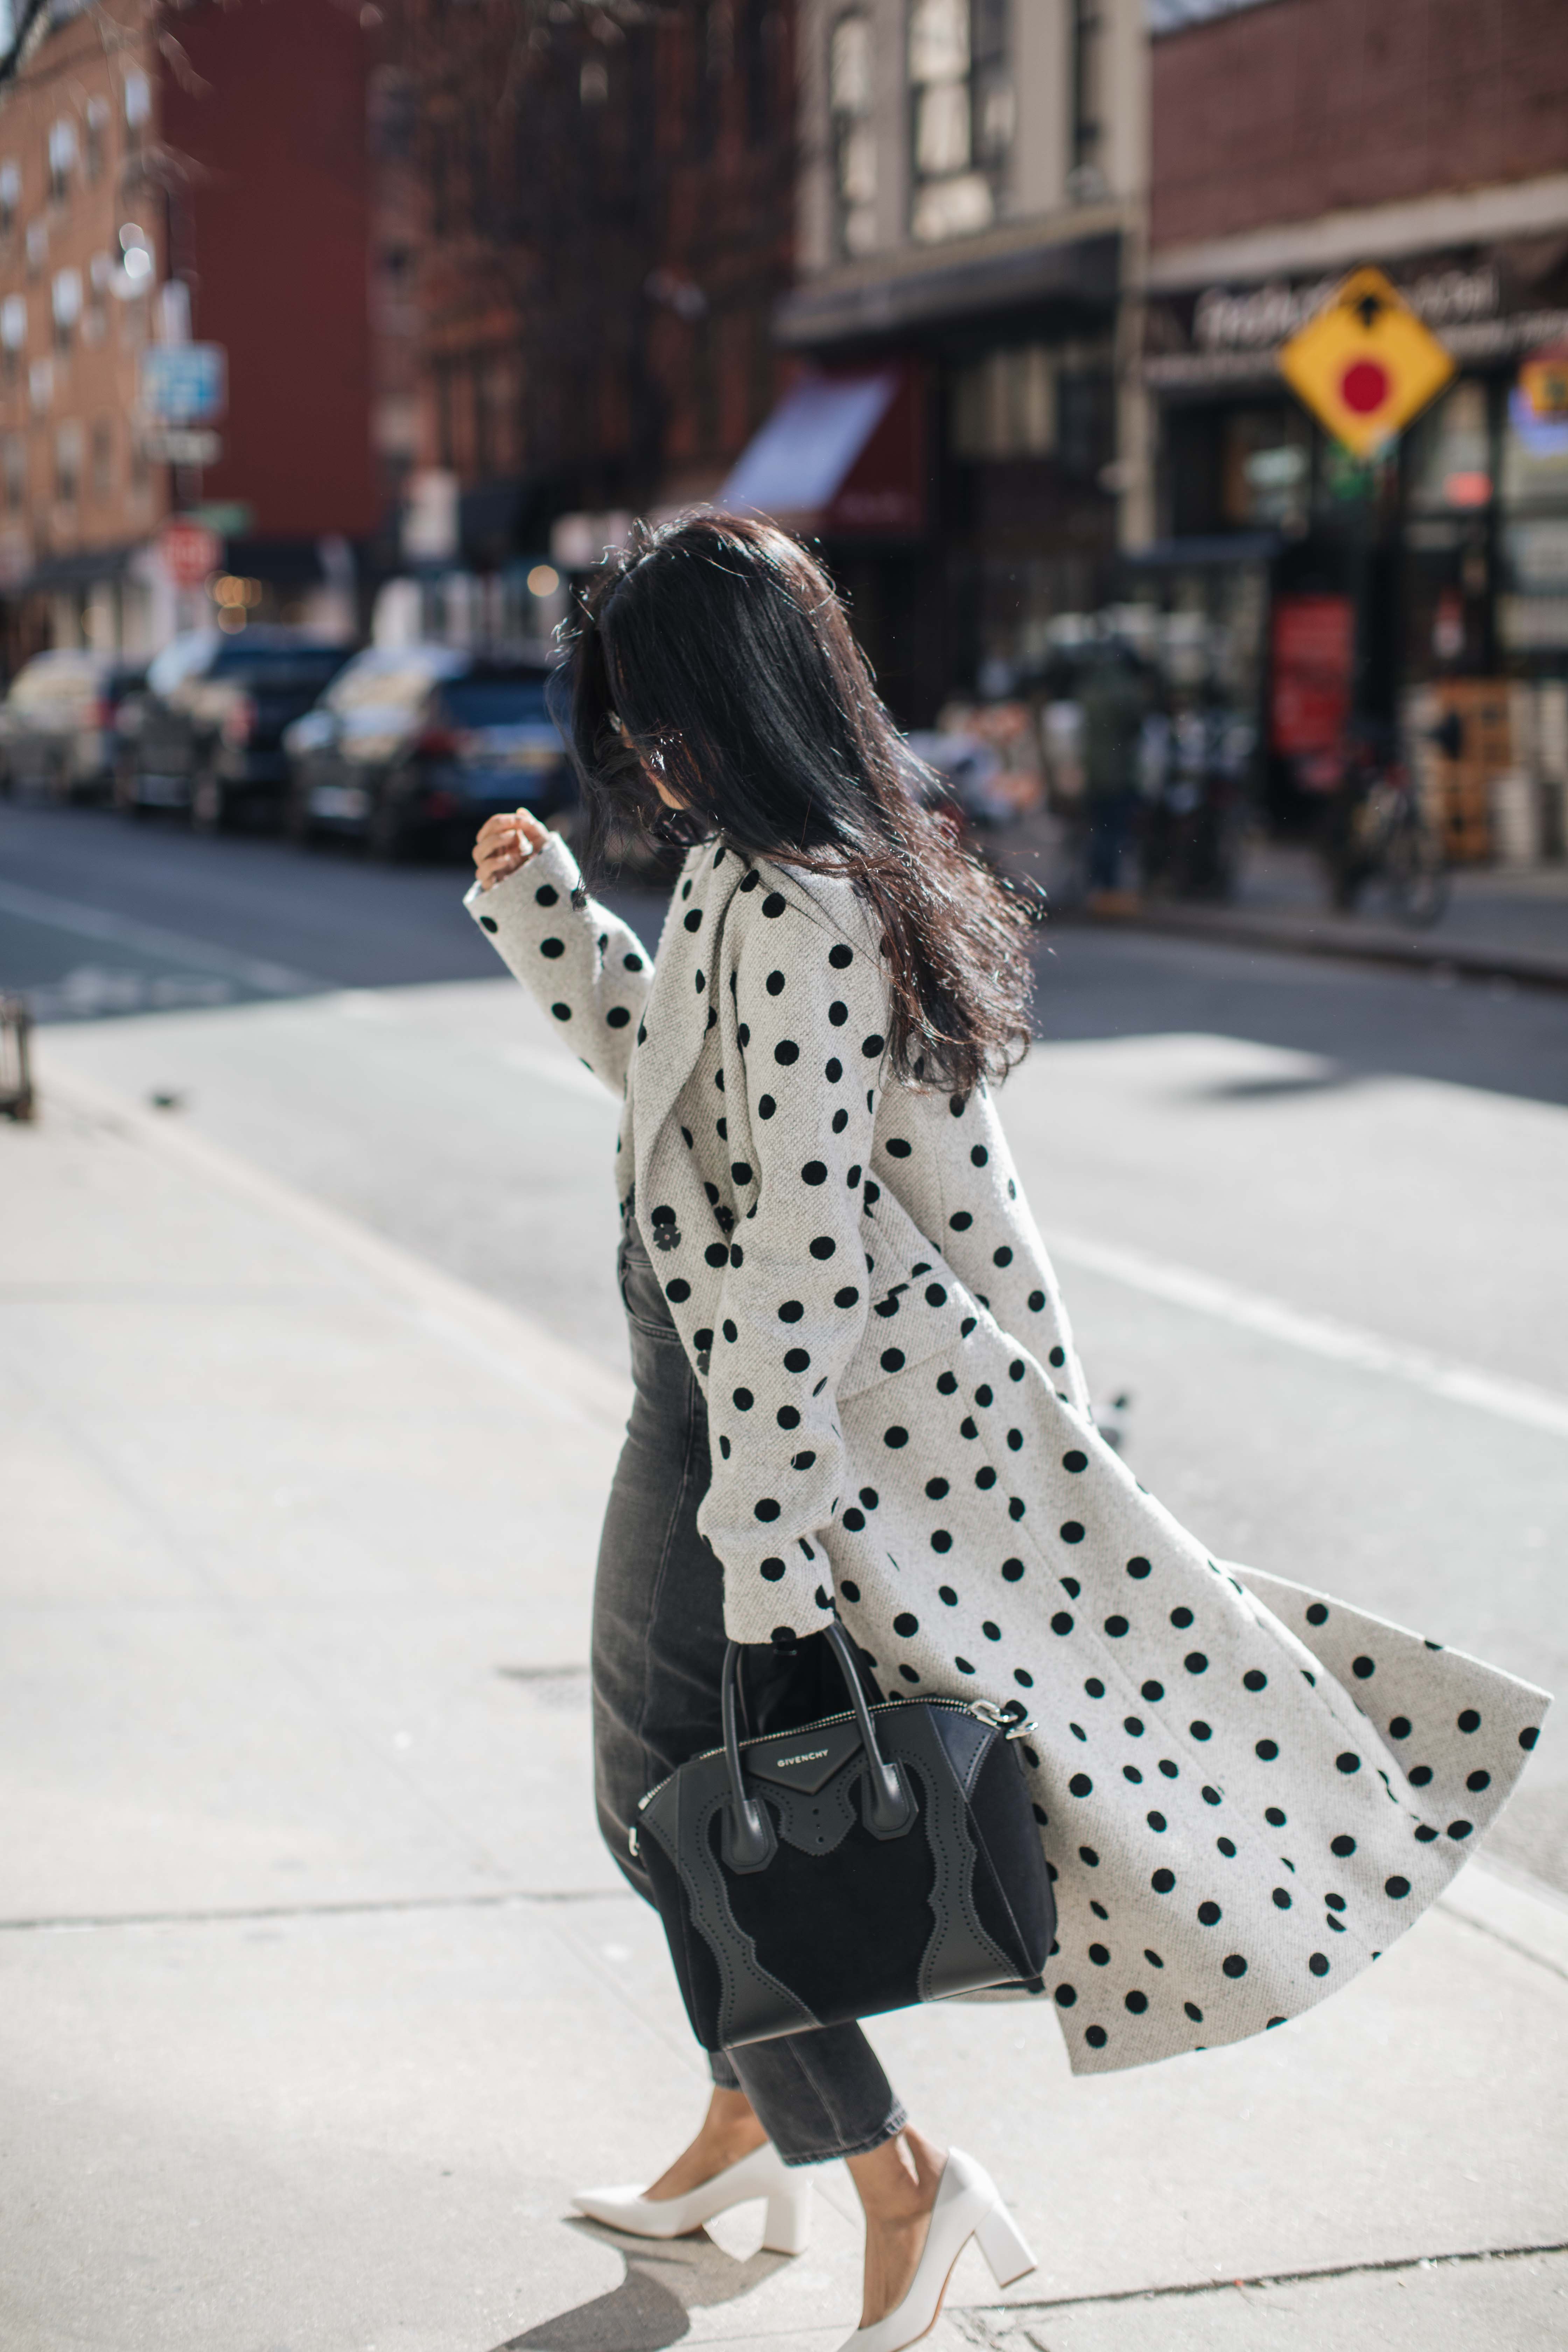 Sheryl Luke Walk In Wonderland wearing the Polka Dot Coat trend